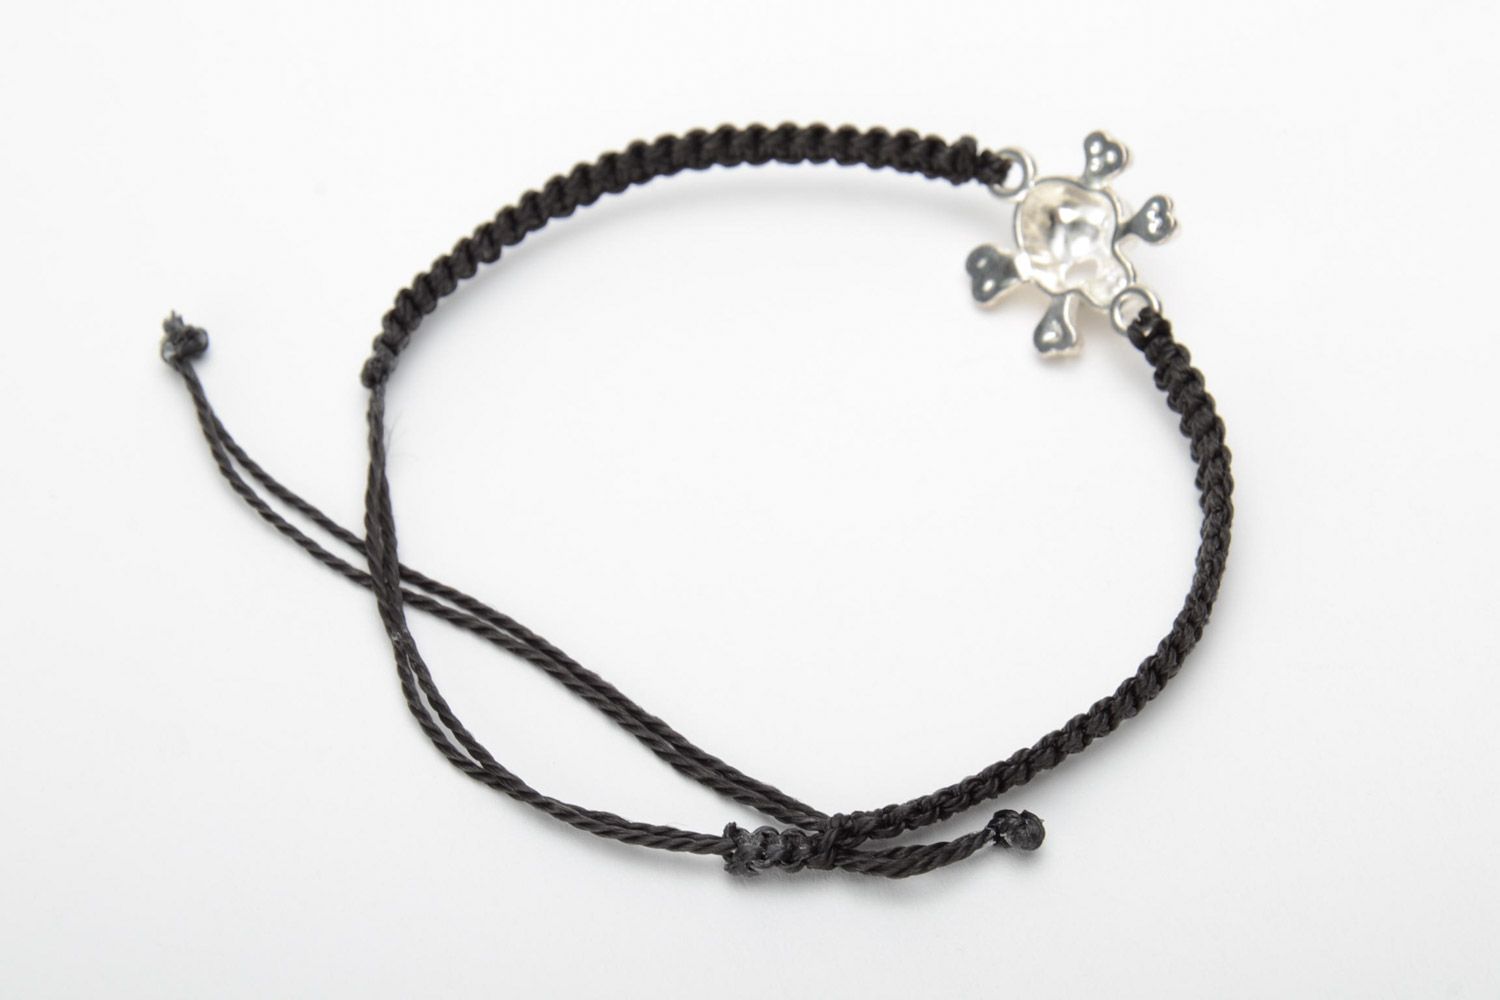 Handmade black woven capron thread wrist bracelet with metal charm in the shape of skull photo 4